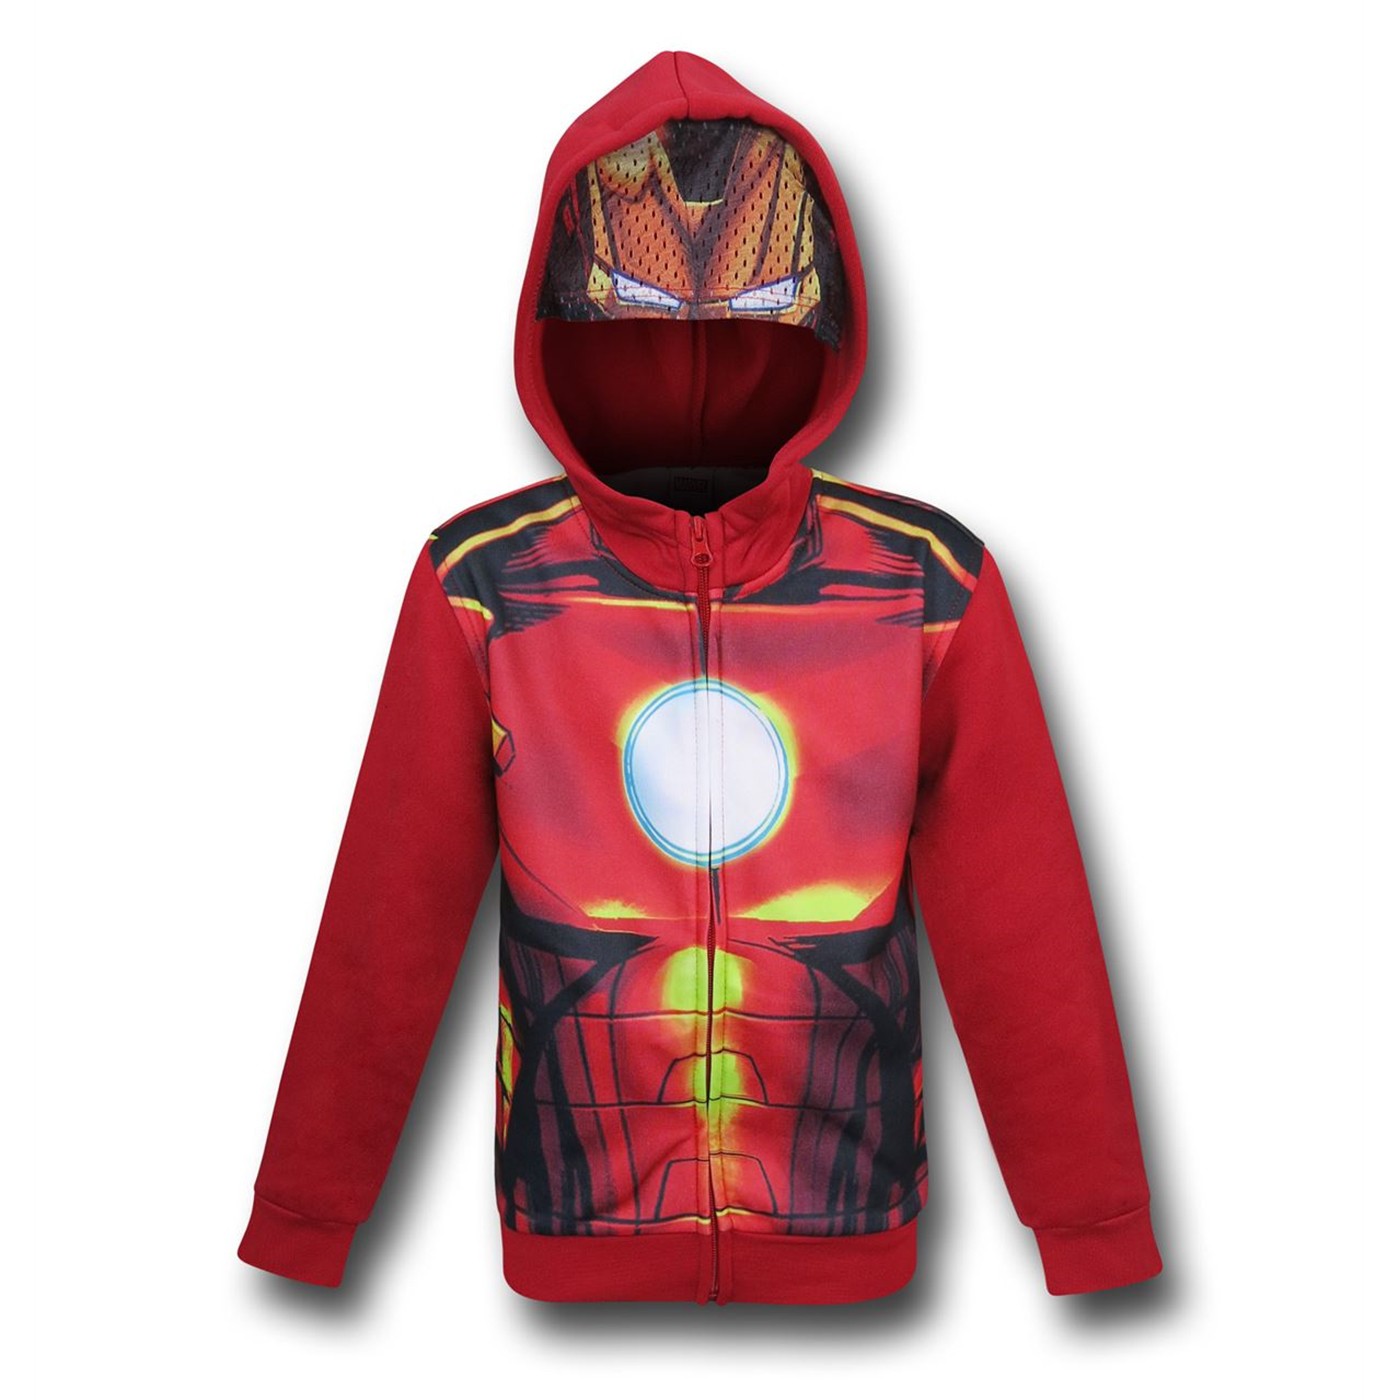 Iron Man Sublimated Kids Costume Hoodie w/Mask